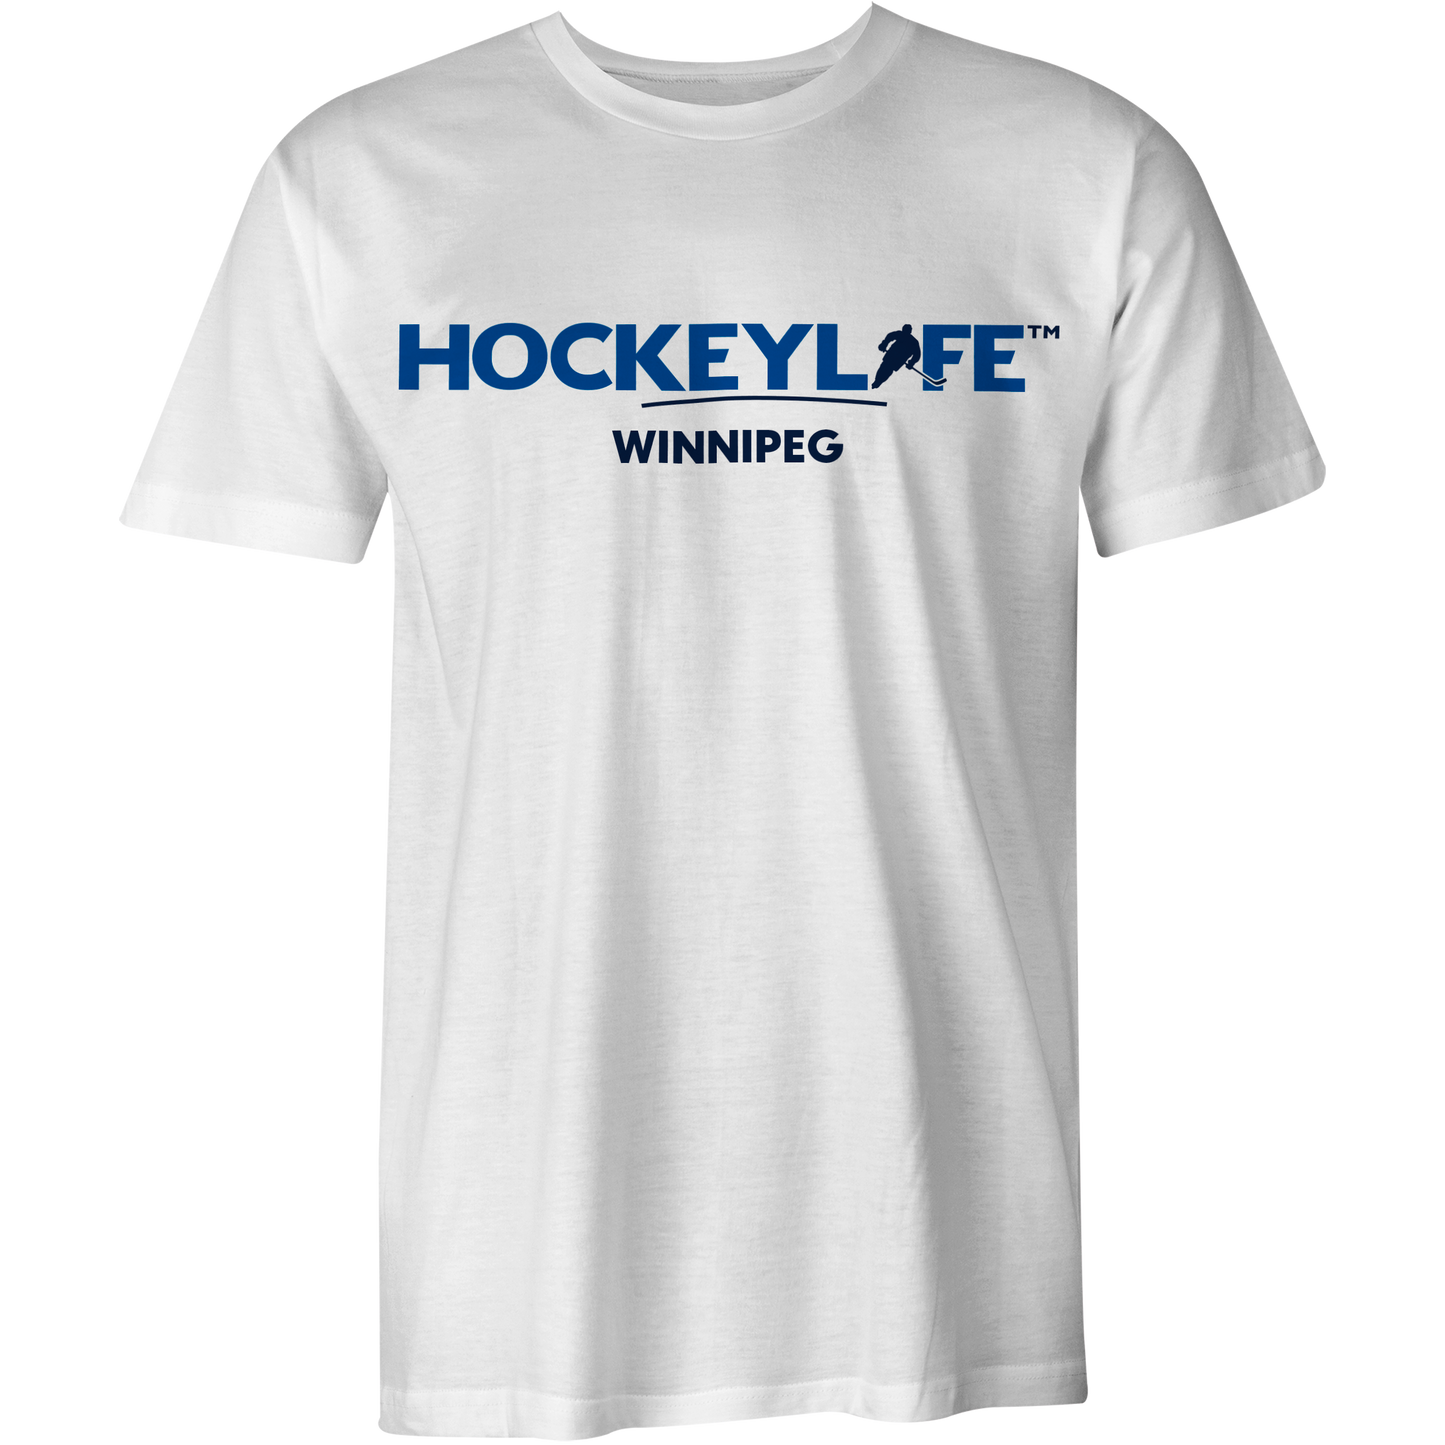 HockeyLife Winnipeg Tee Shirt